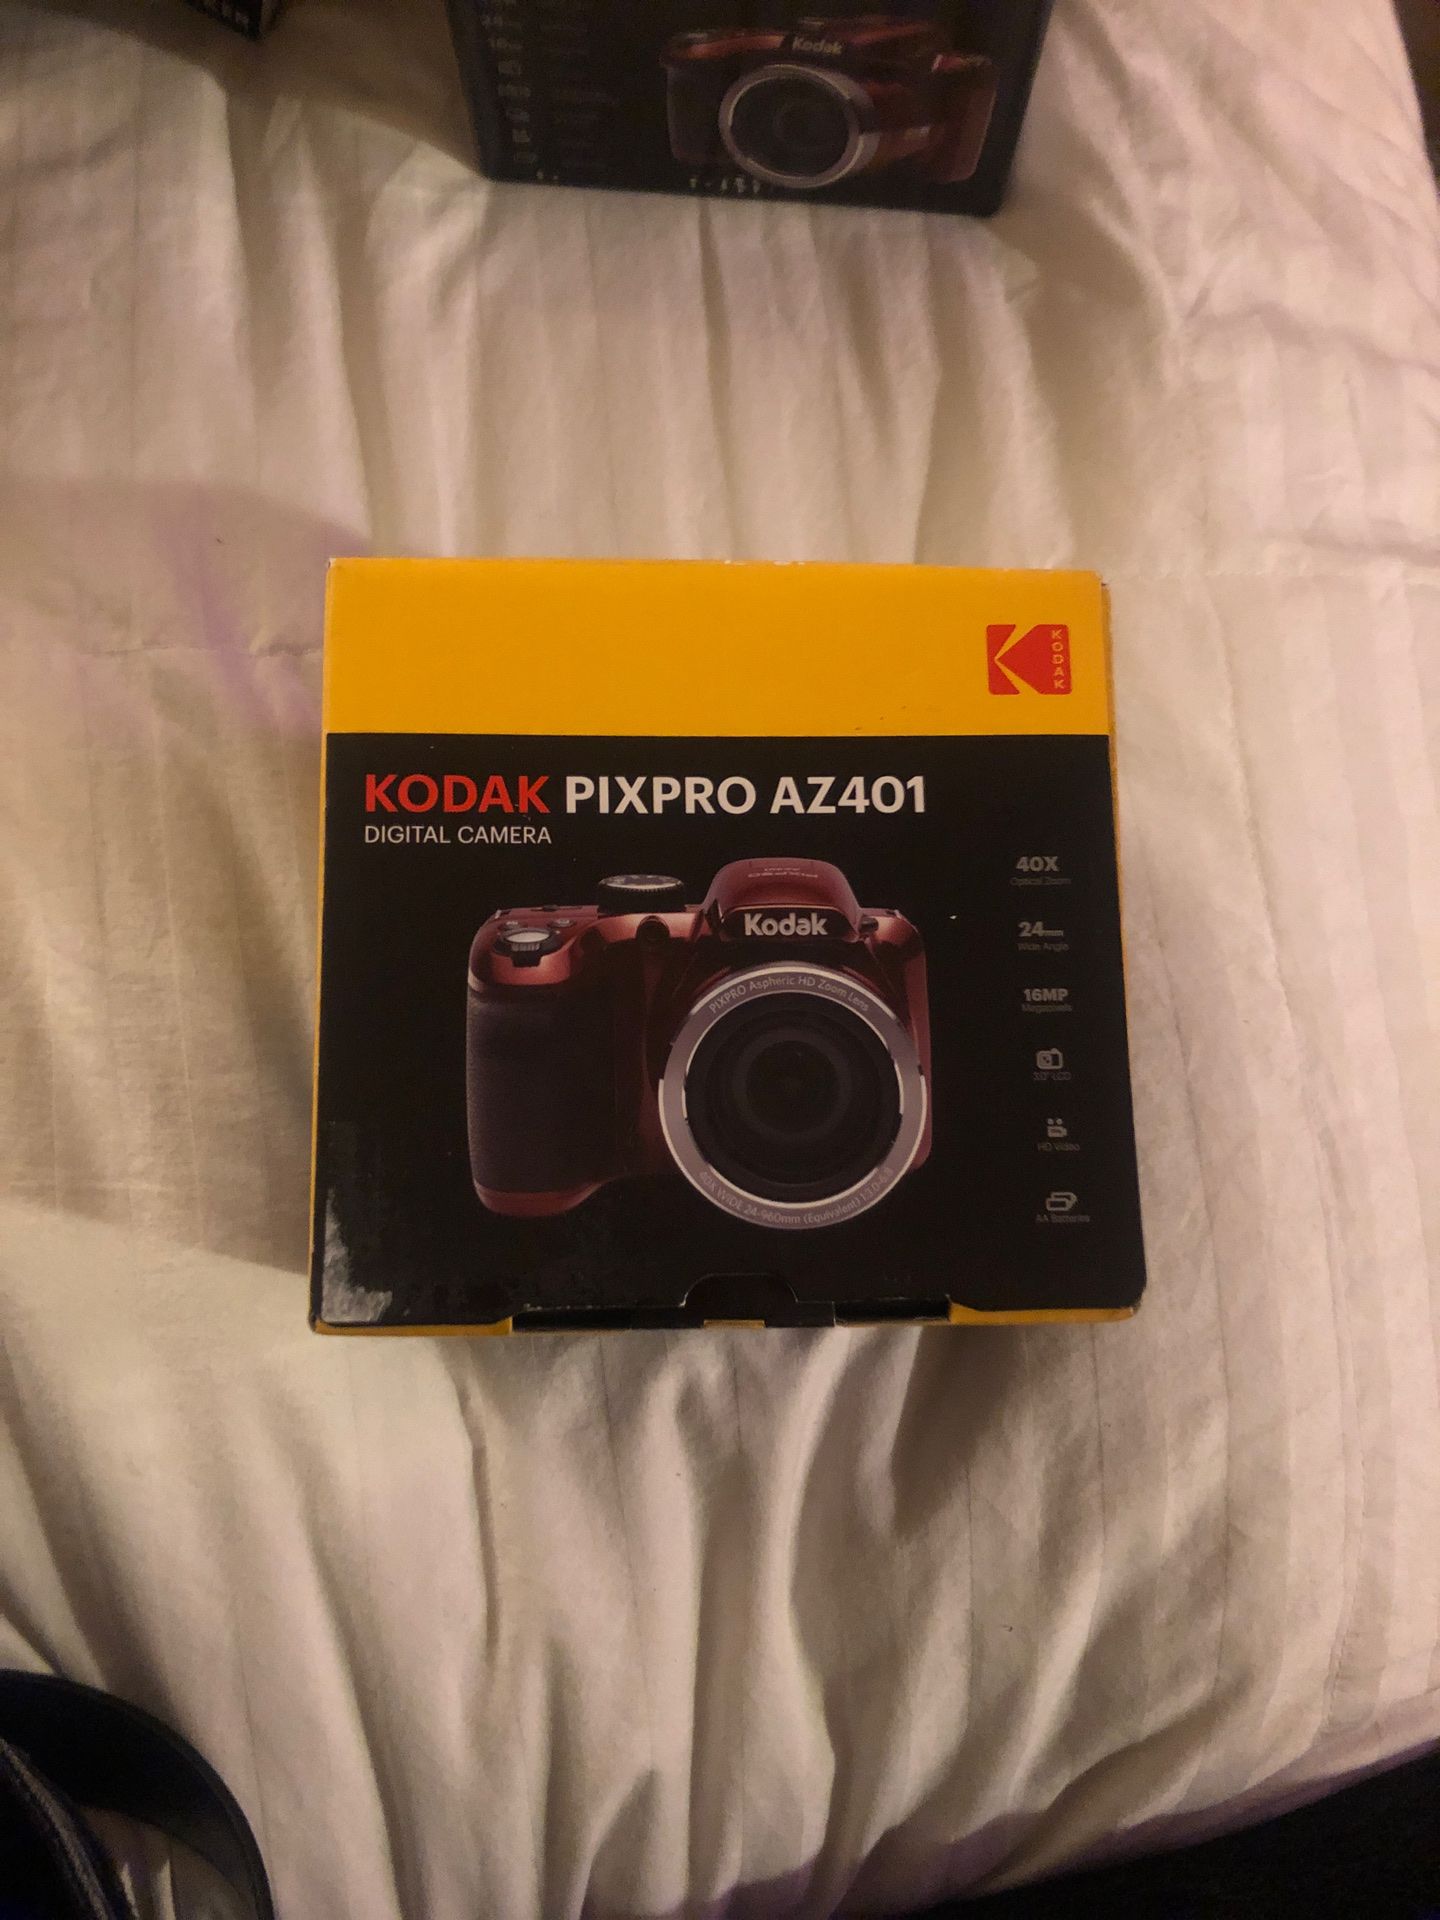 Kodak Pixpro Az401 digital camera